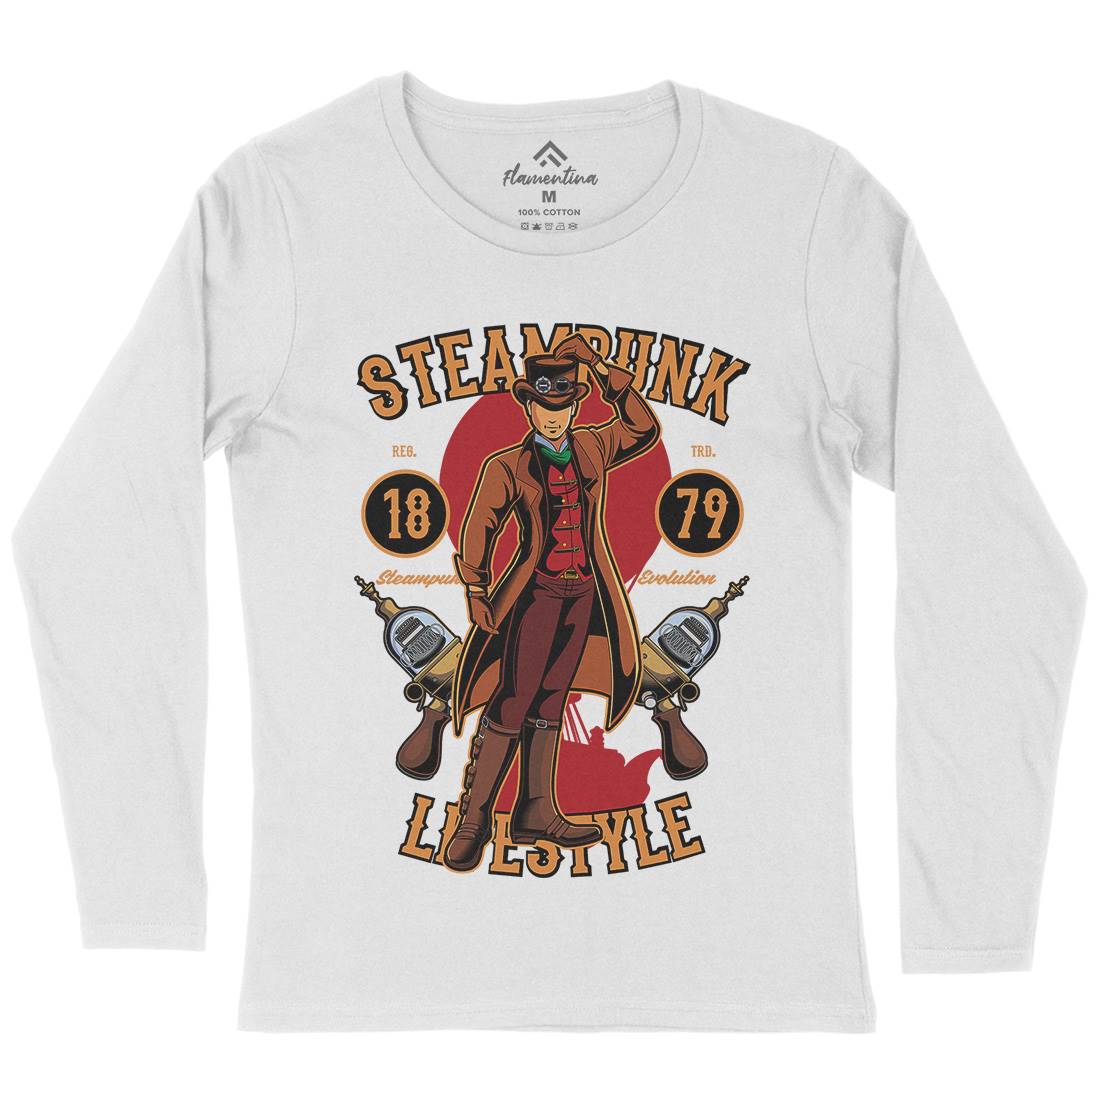 Lifestyle Womens Long Sleeve T-Shirt Steampunk C450